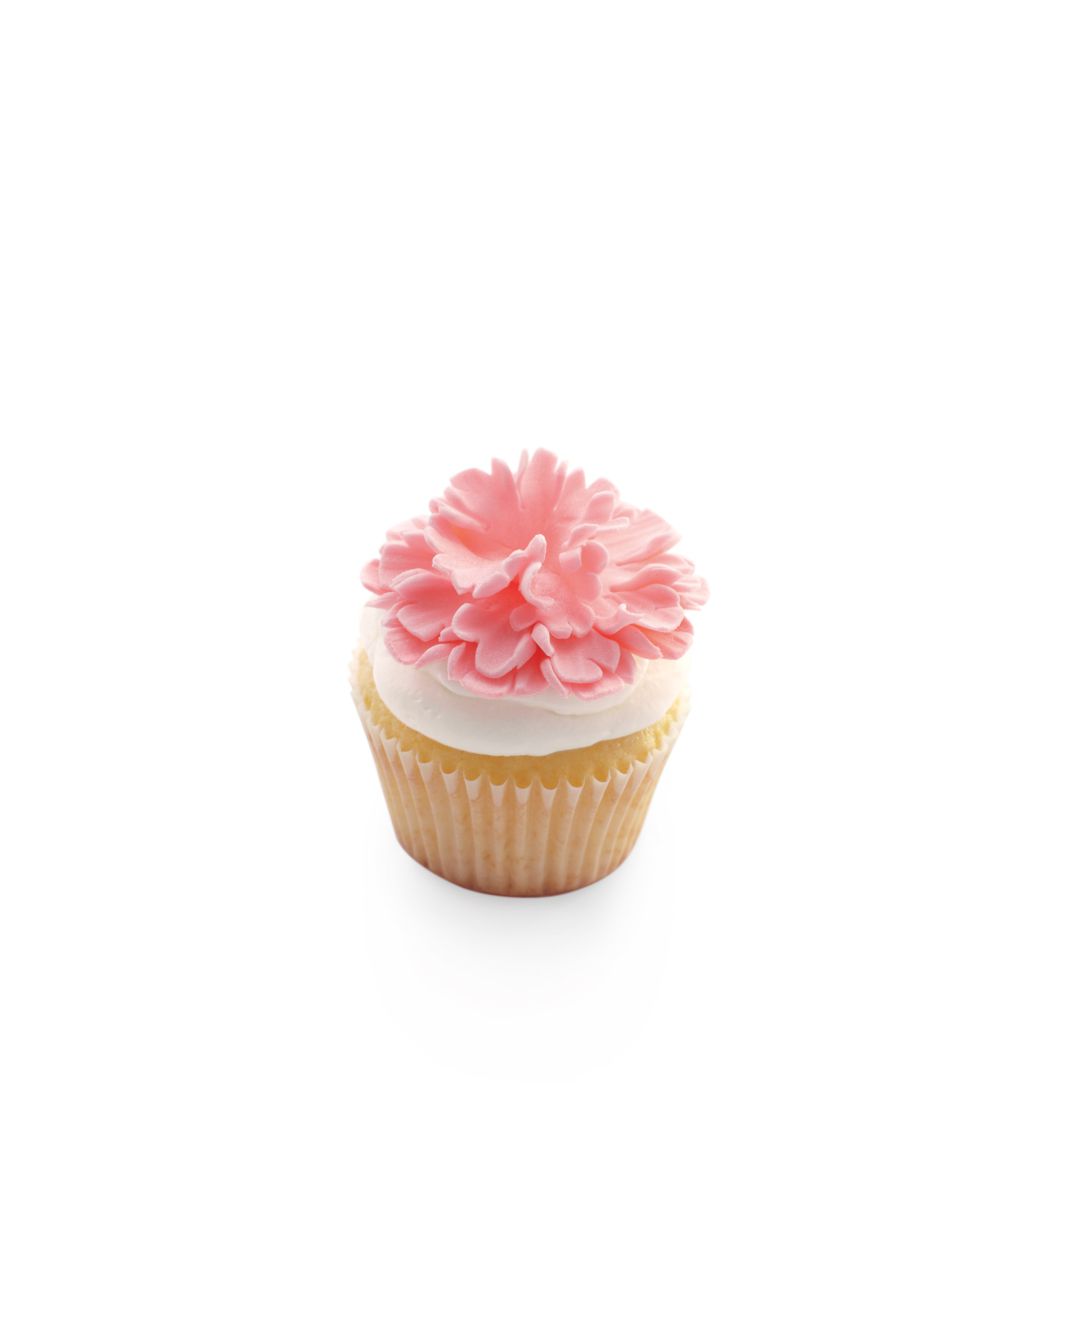 handmade-cupcake-mwd108612.jpg